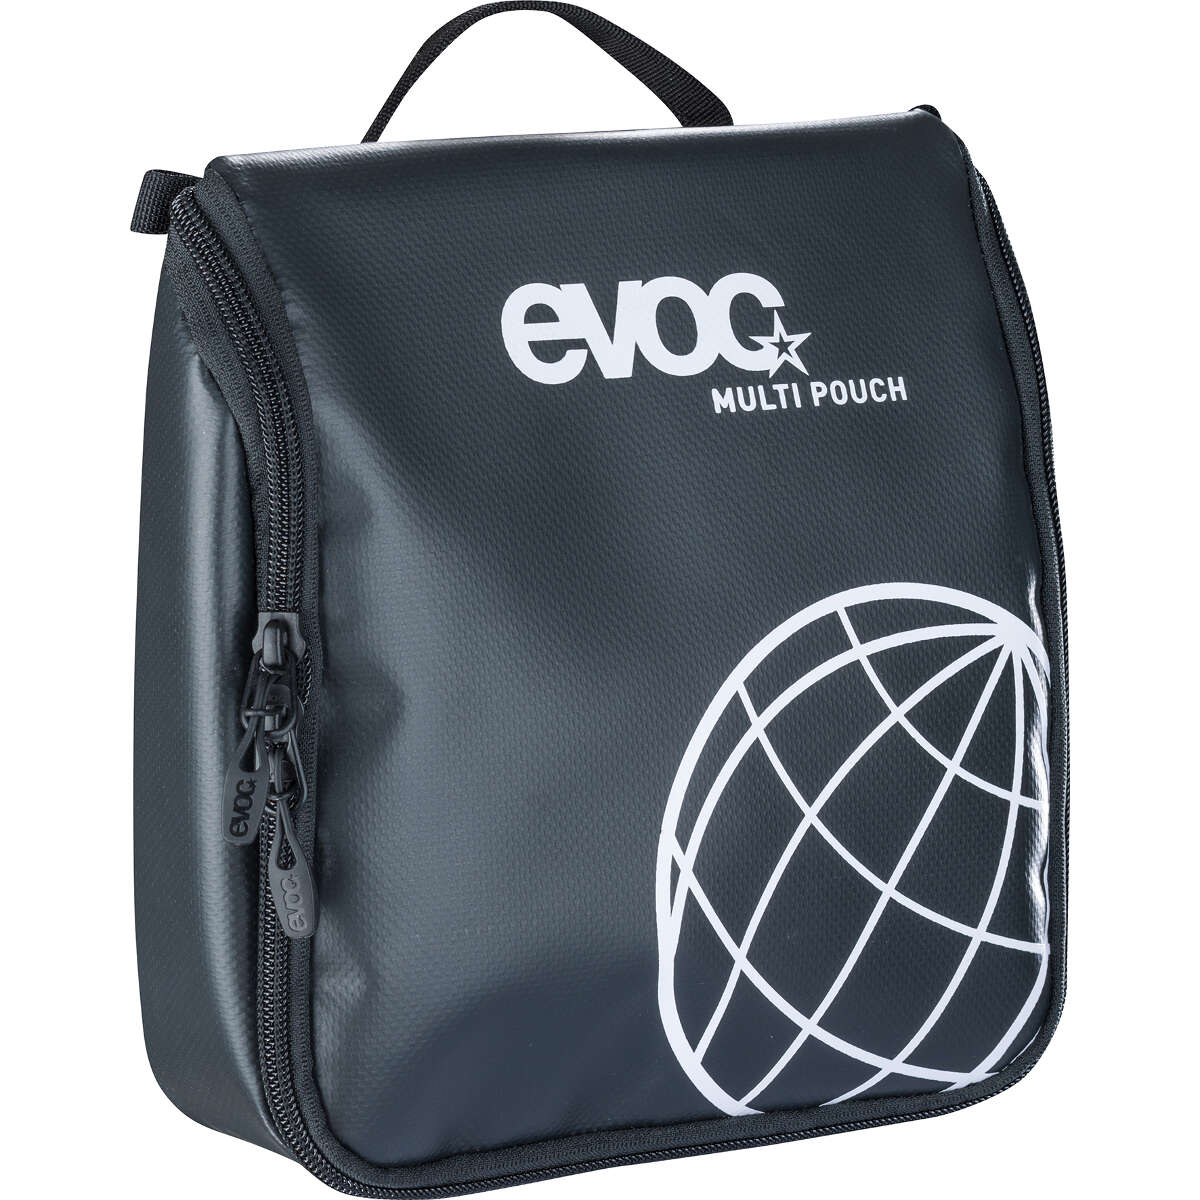 Evoc Tool Bag Multi Pouch Black